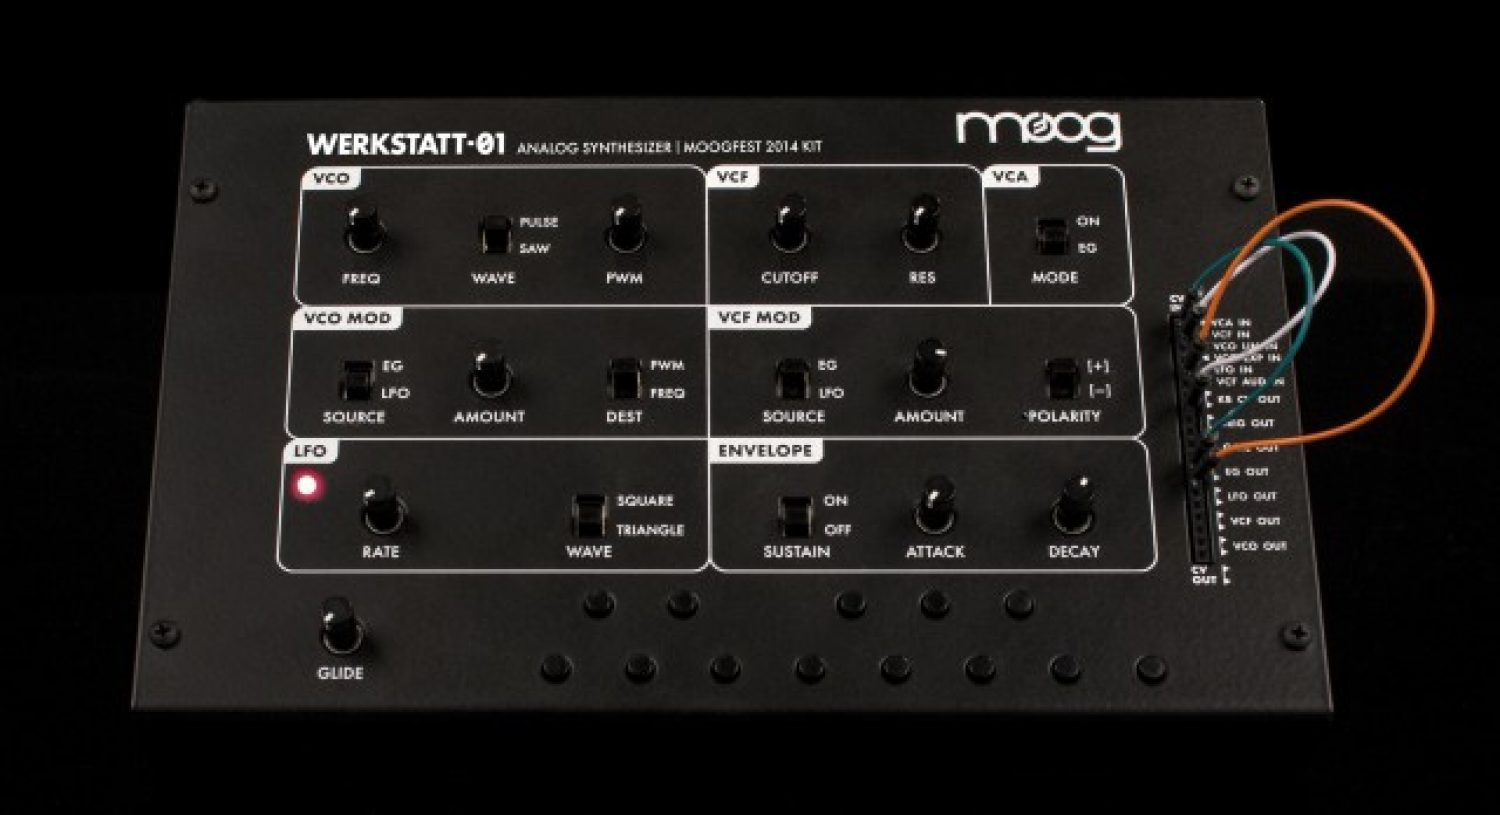 Moog releases the Werkstatt-Ø1 DIY analog synth